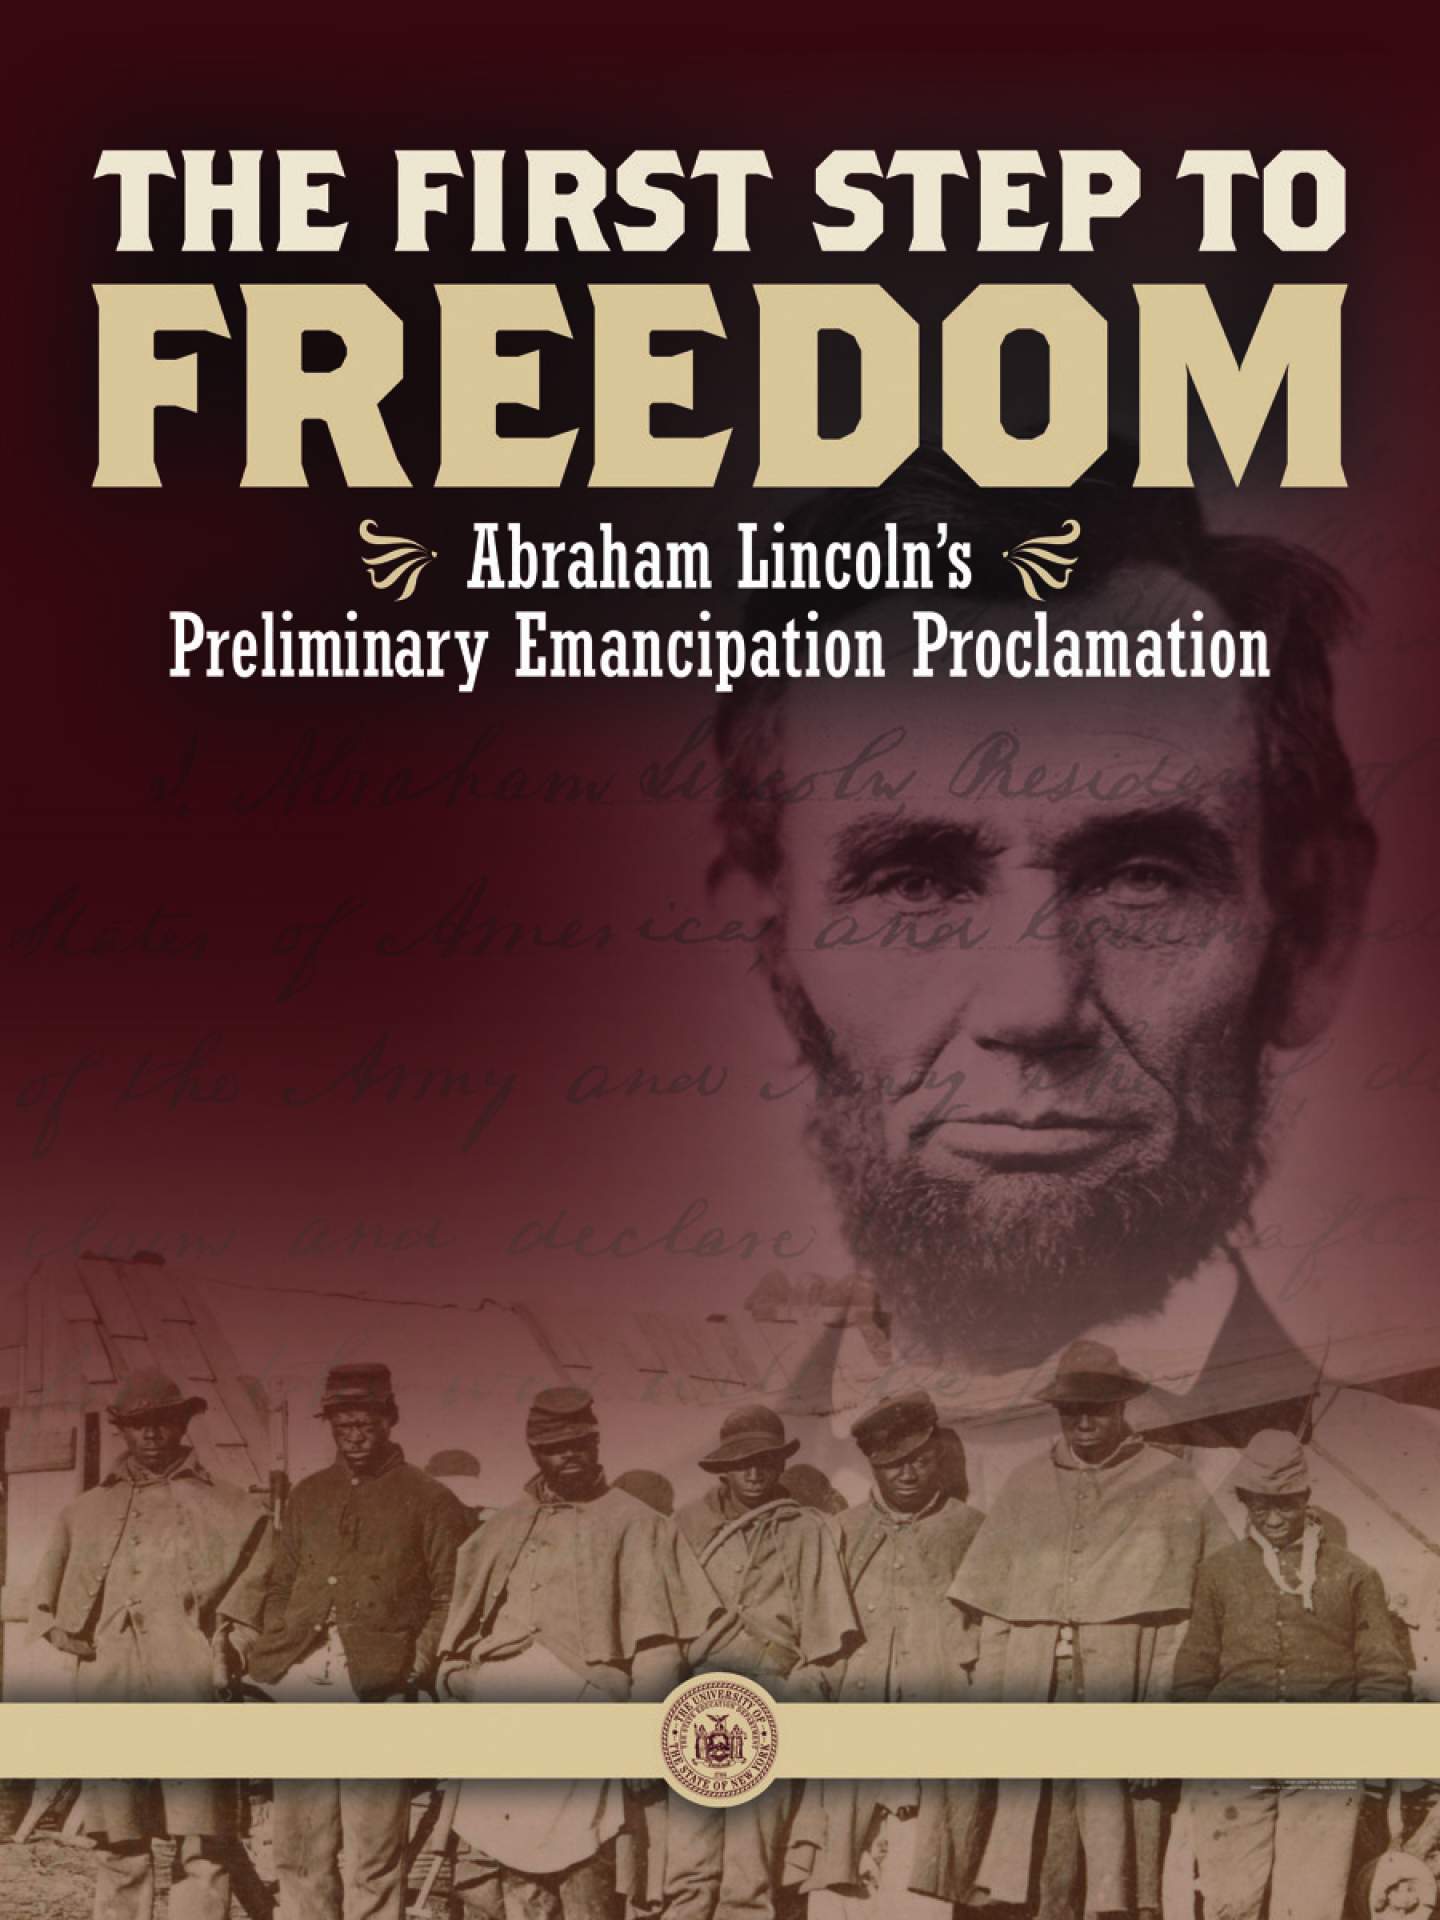 Lincoln's Preliminary Emancipation Proclamation